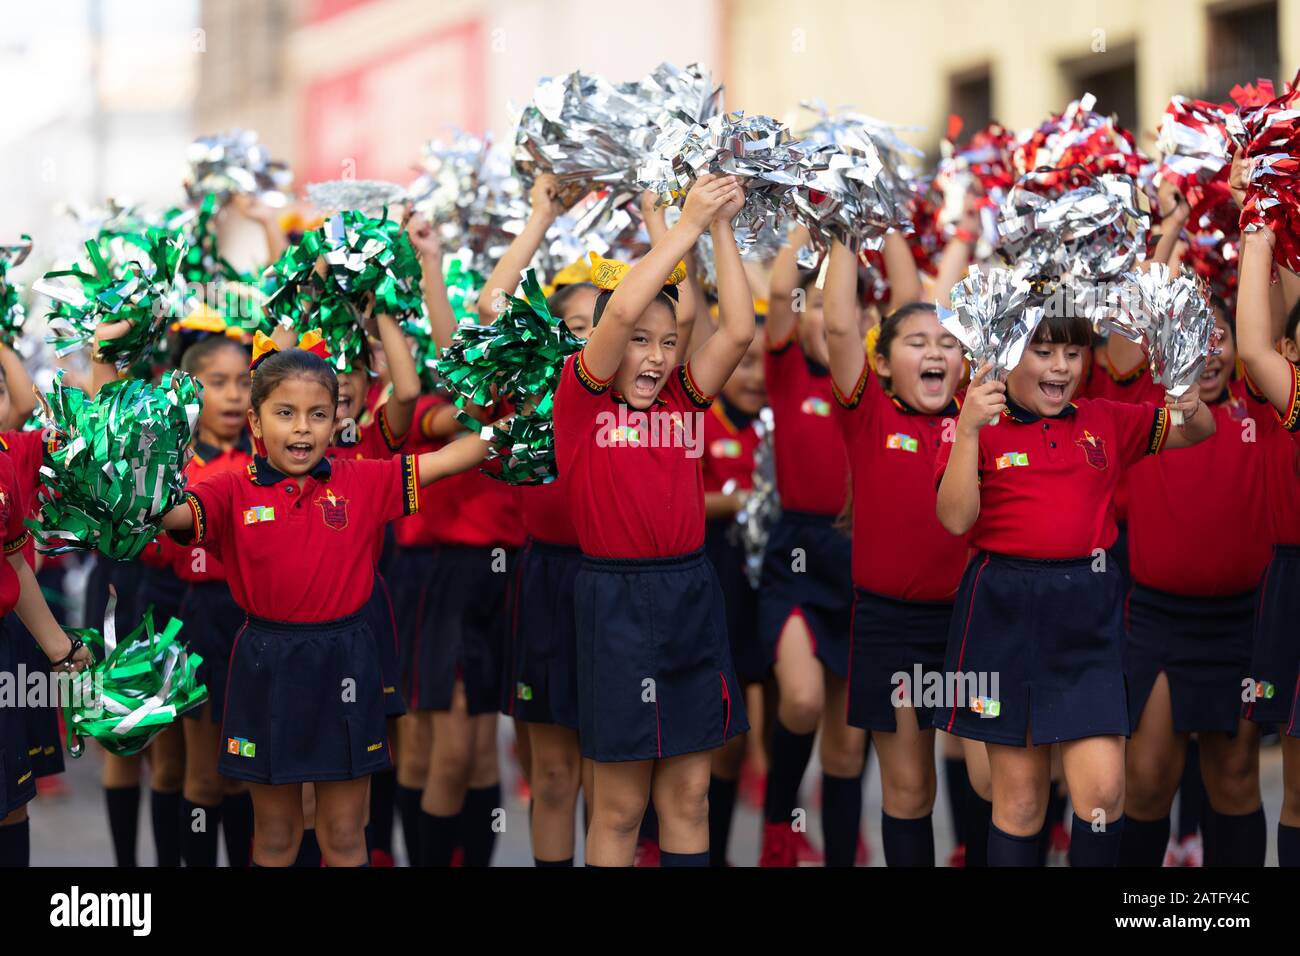 Matamoros, Tamaulipas, Mexico - November 20, 2019: The Mexican Revolution Day Parade, School girls using Pom-poms, cheering during the parade Stock Photo